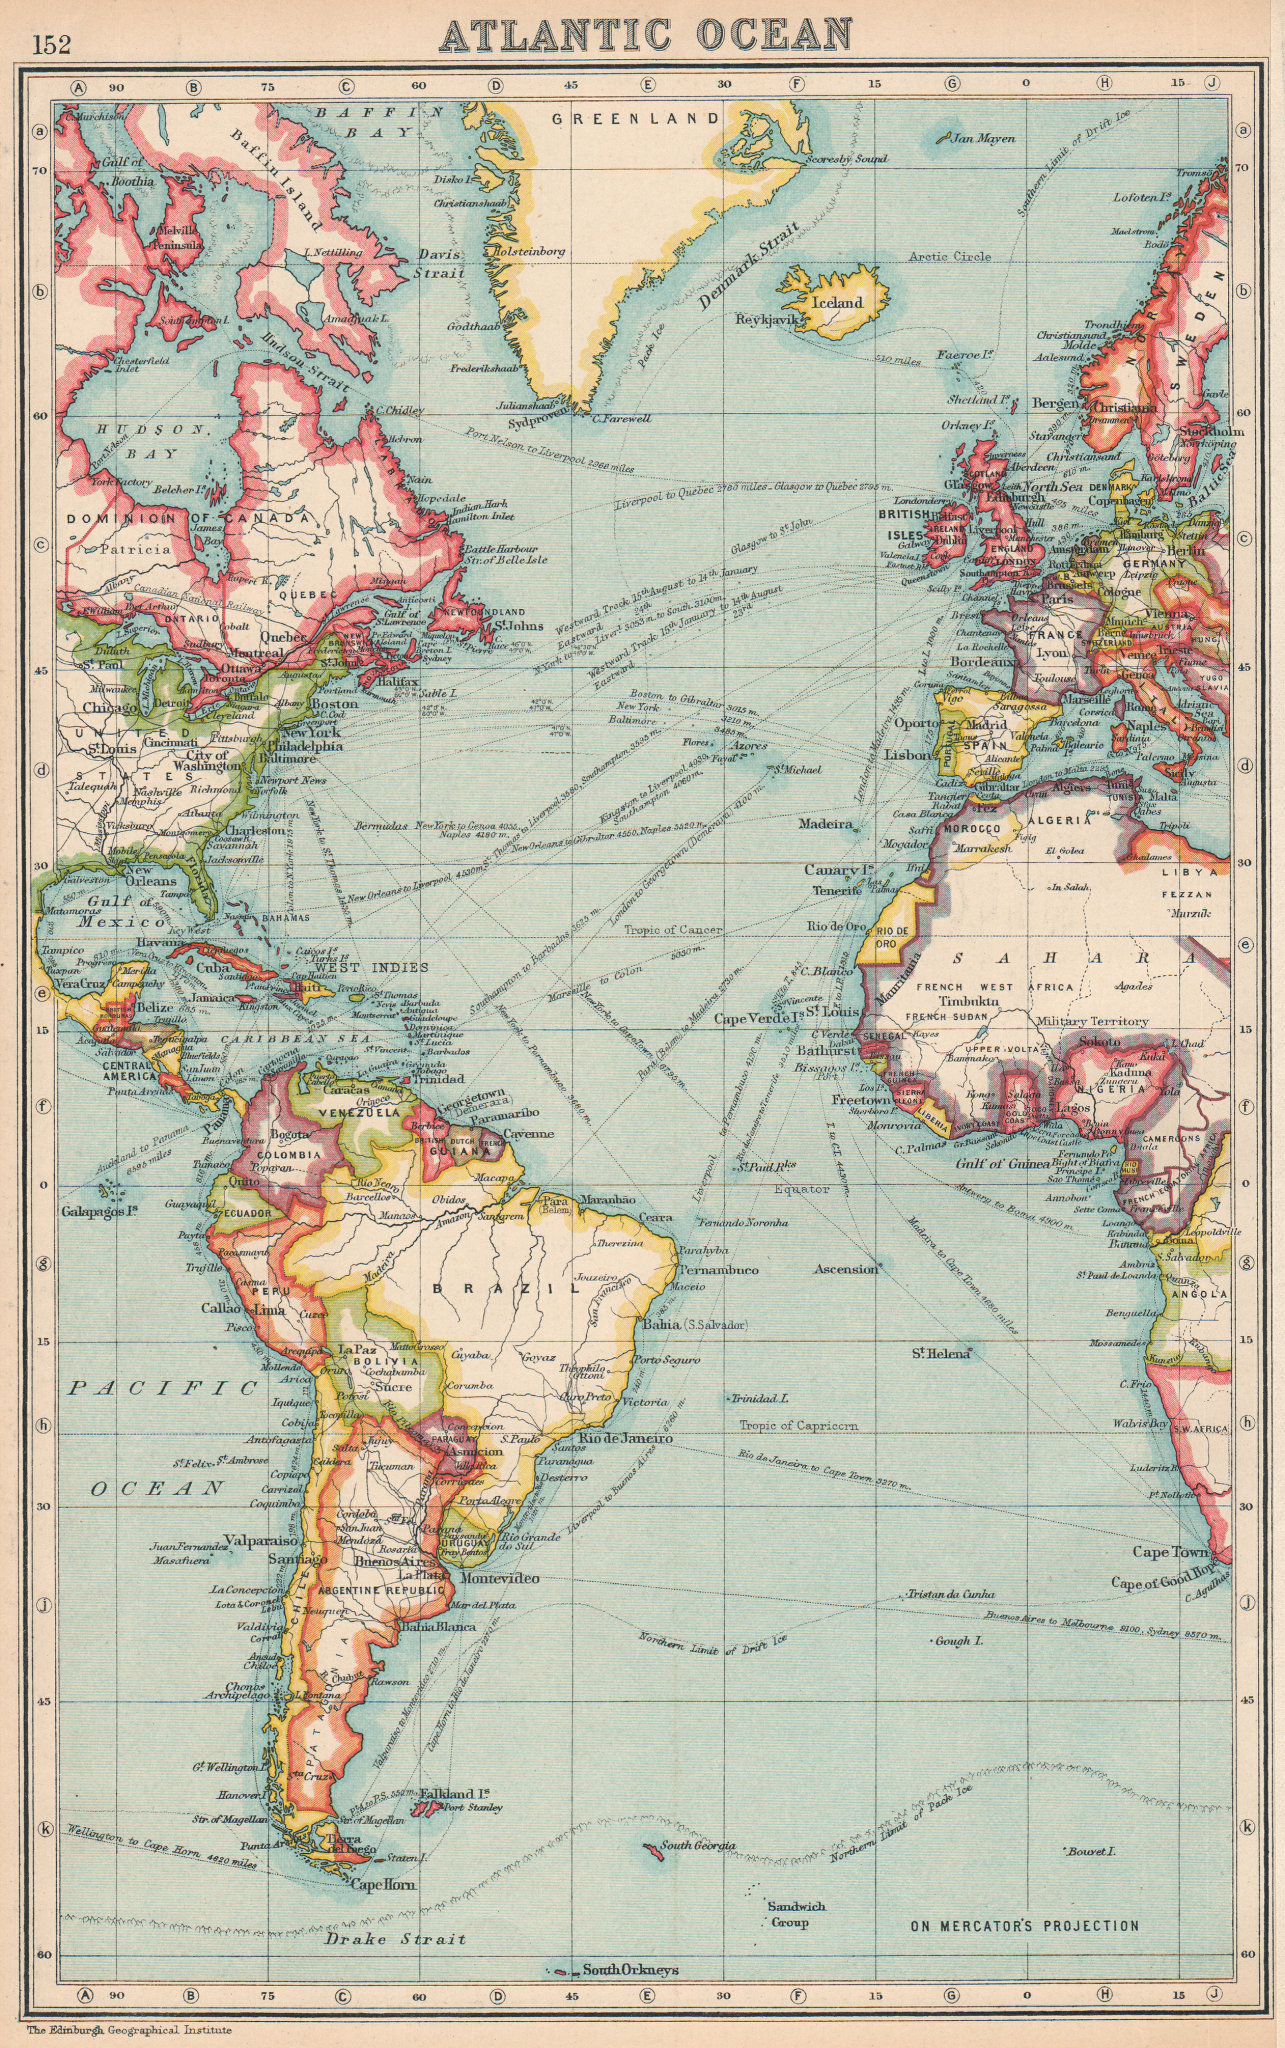 Atlantic Ocean Shipping Lanes Map 